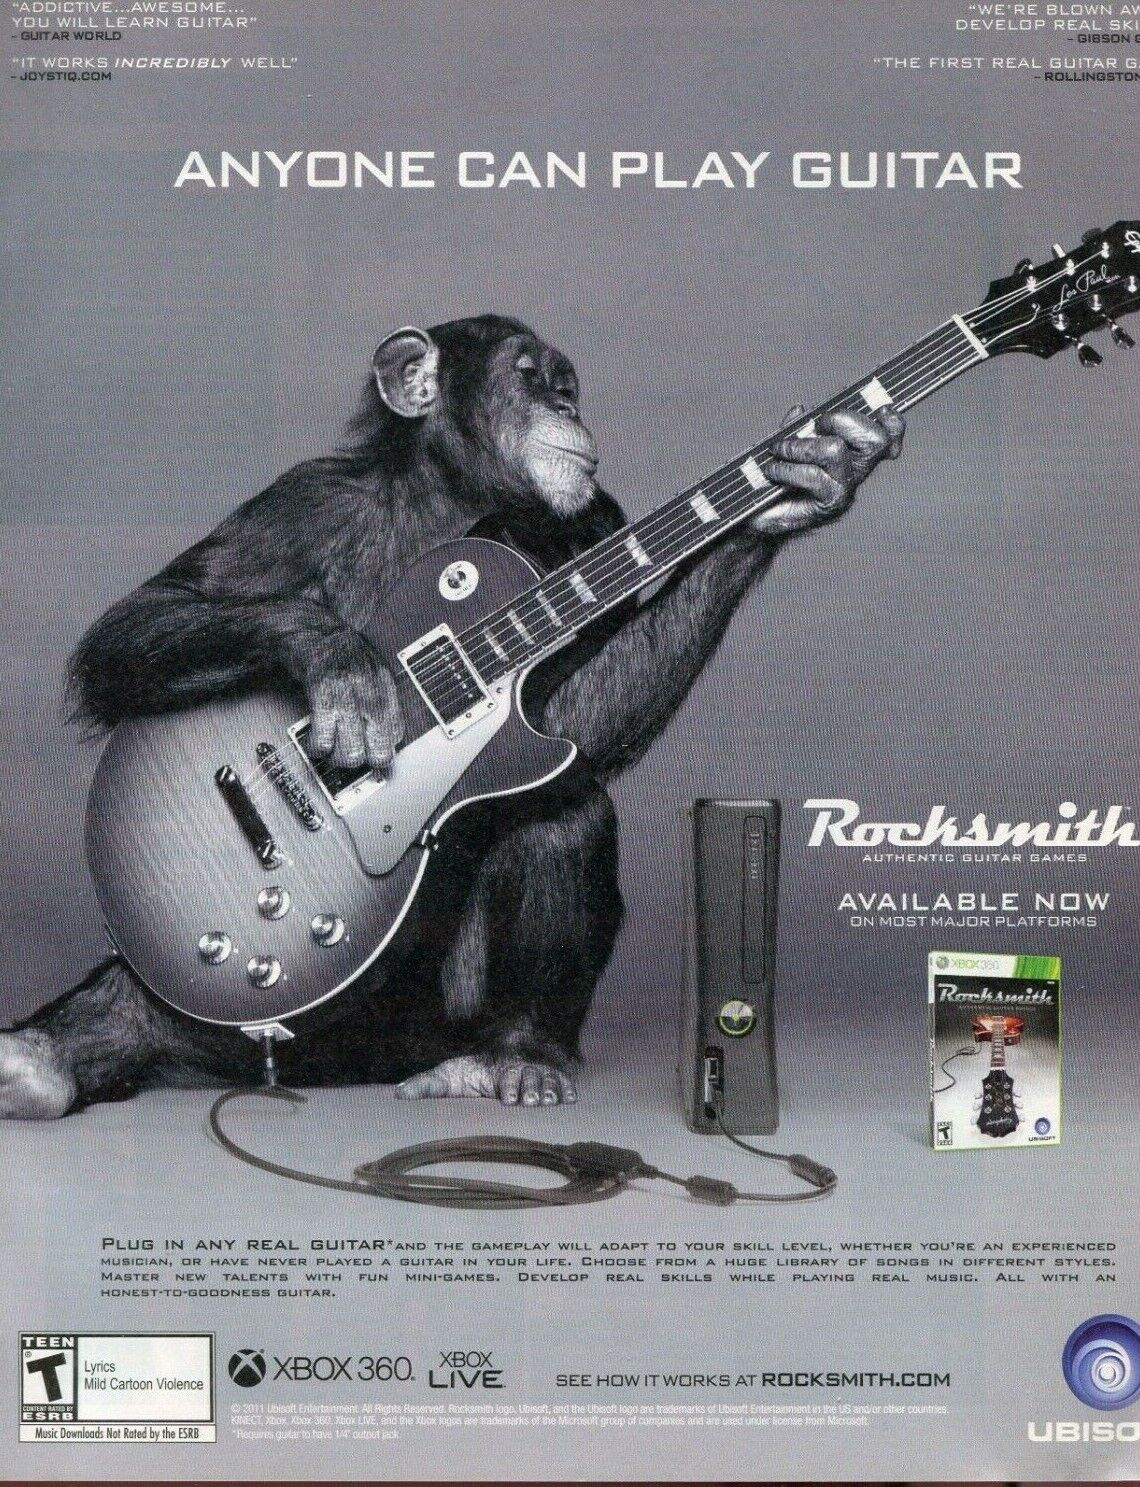 2011 Print Ad of Rocksmith XBOX 360 game advertisement monkey playing guitar